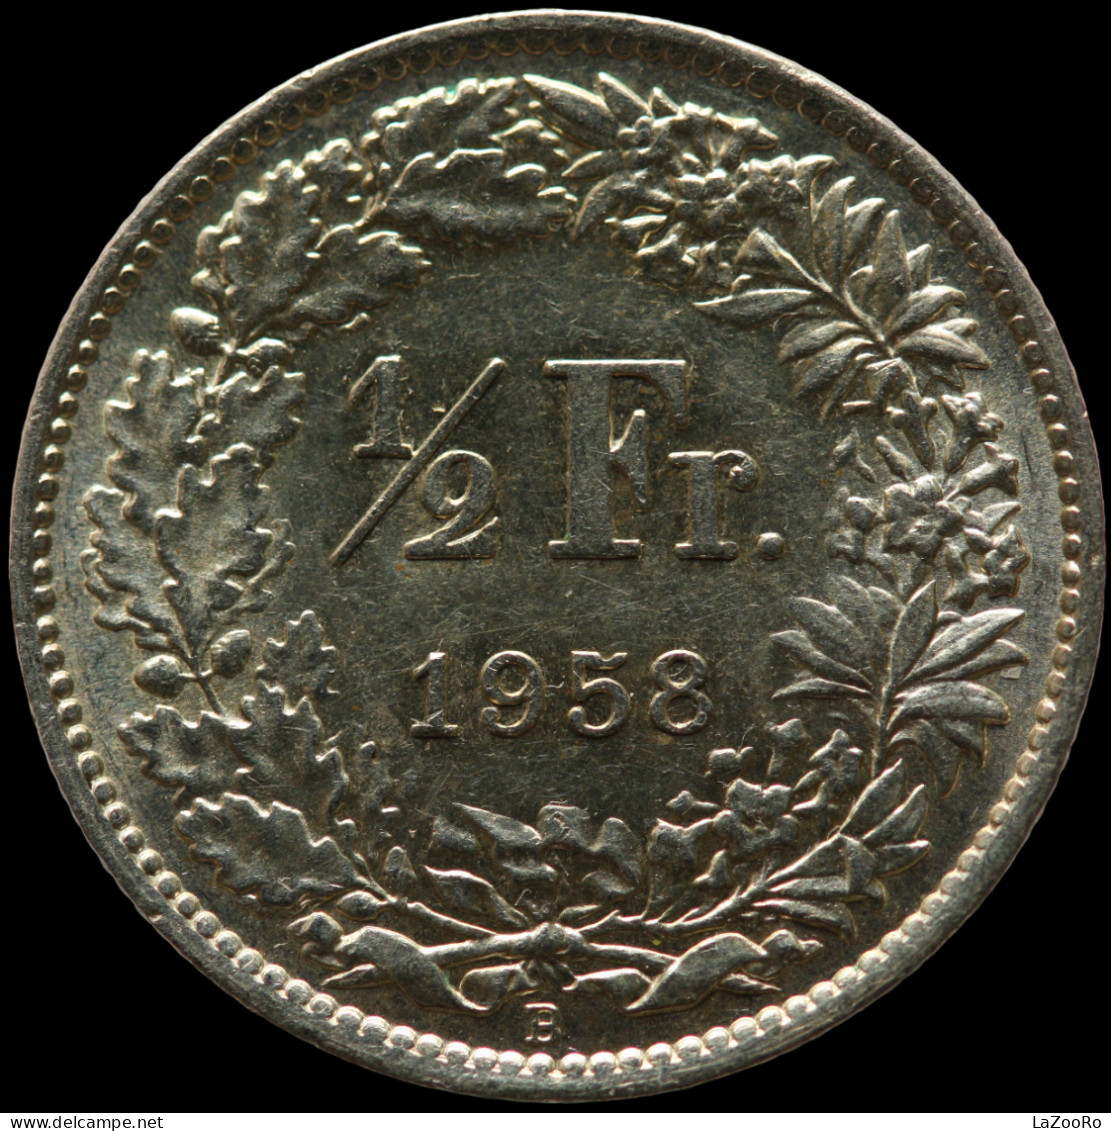 LaZooRo: Switzerland 1/2 Franc 1958 Specimen - Silver - Prova